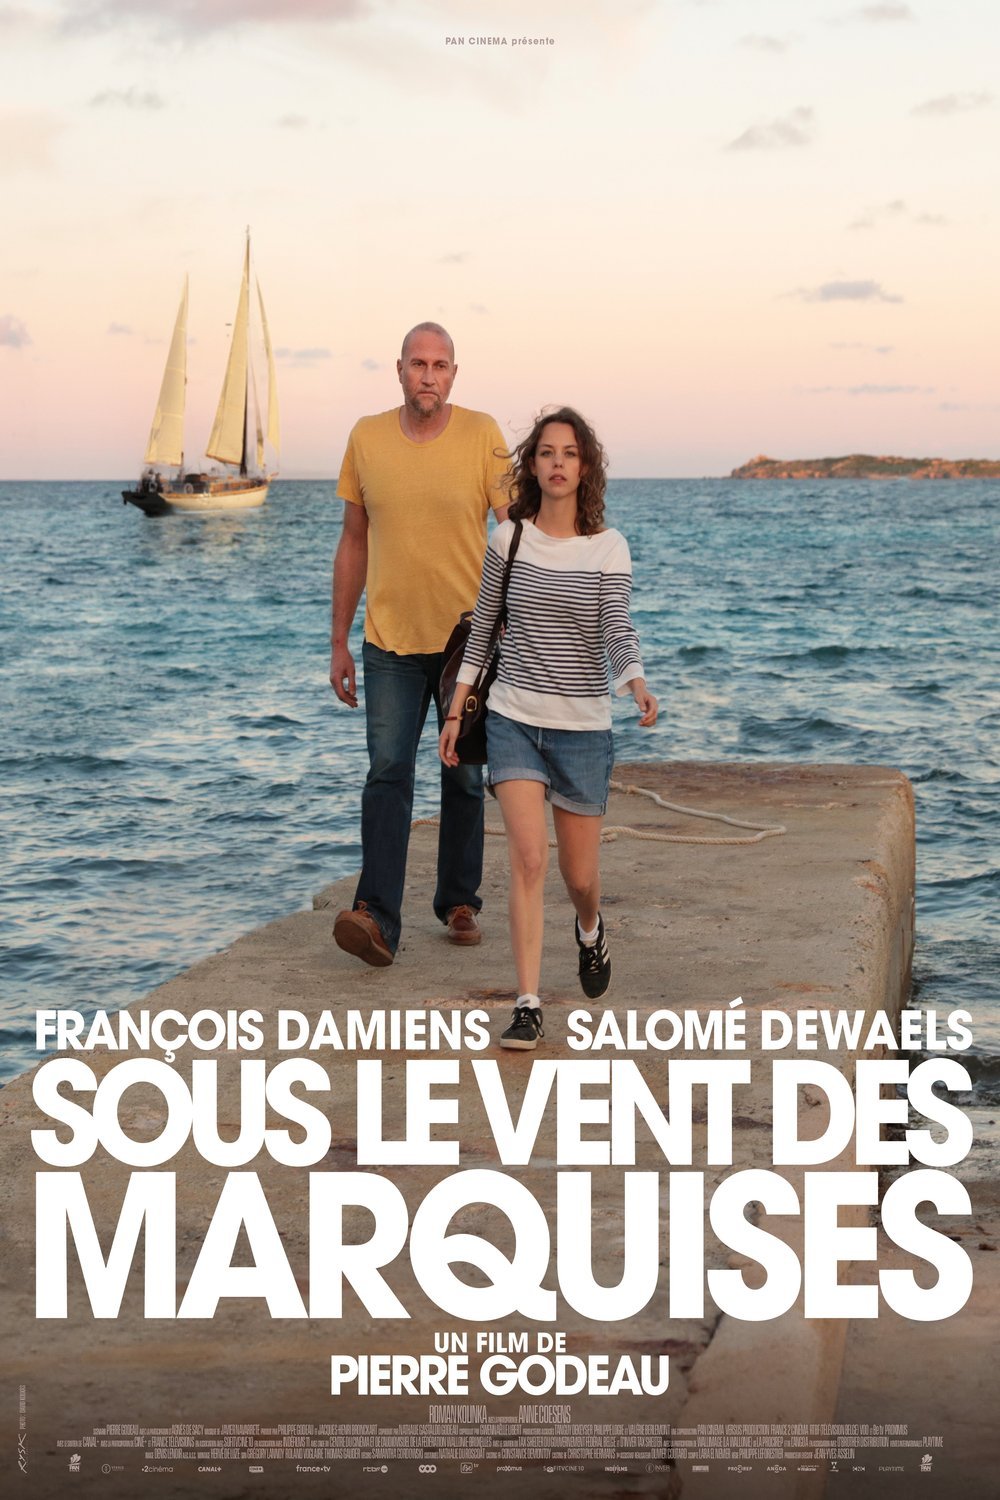 Poster of the movie Sous le vent des Marquises